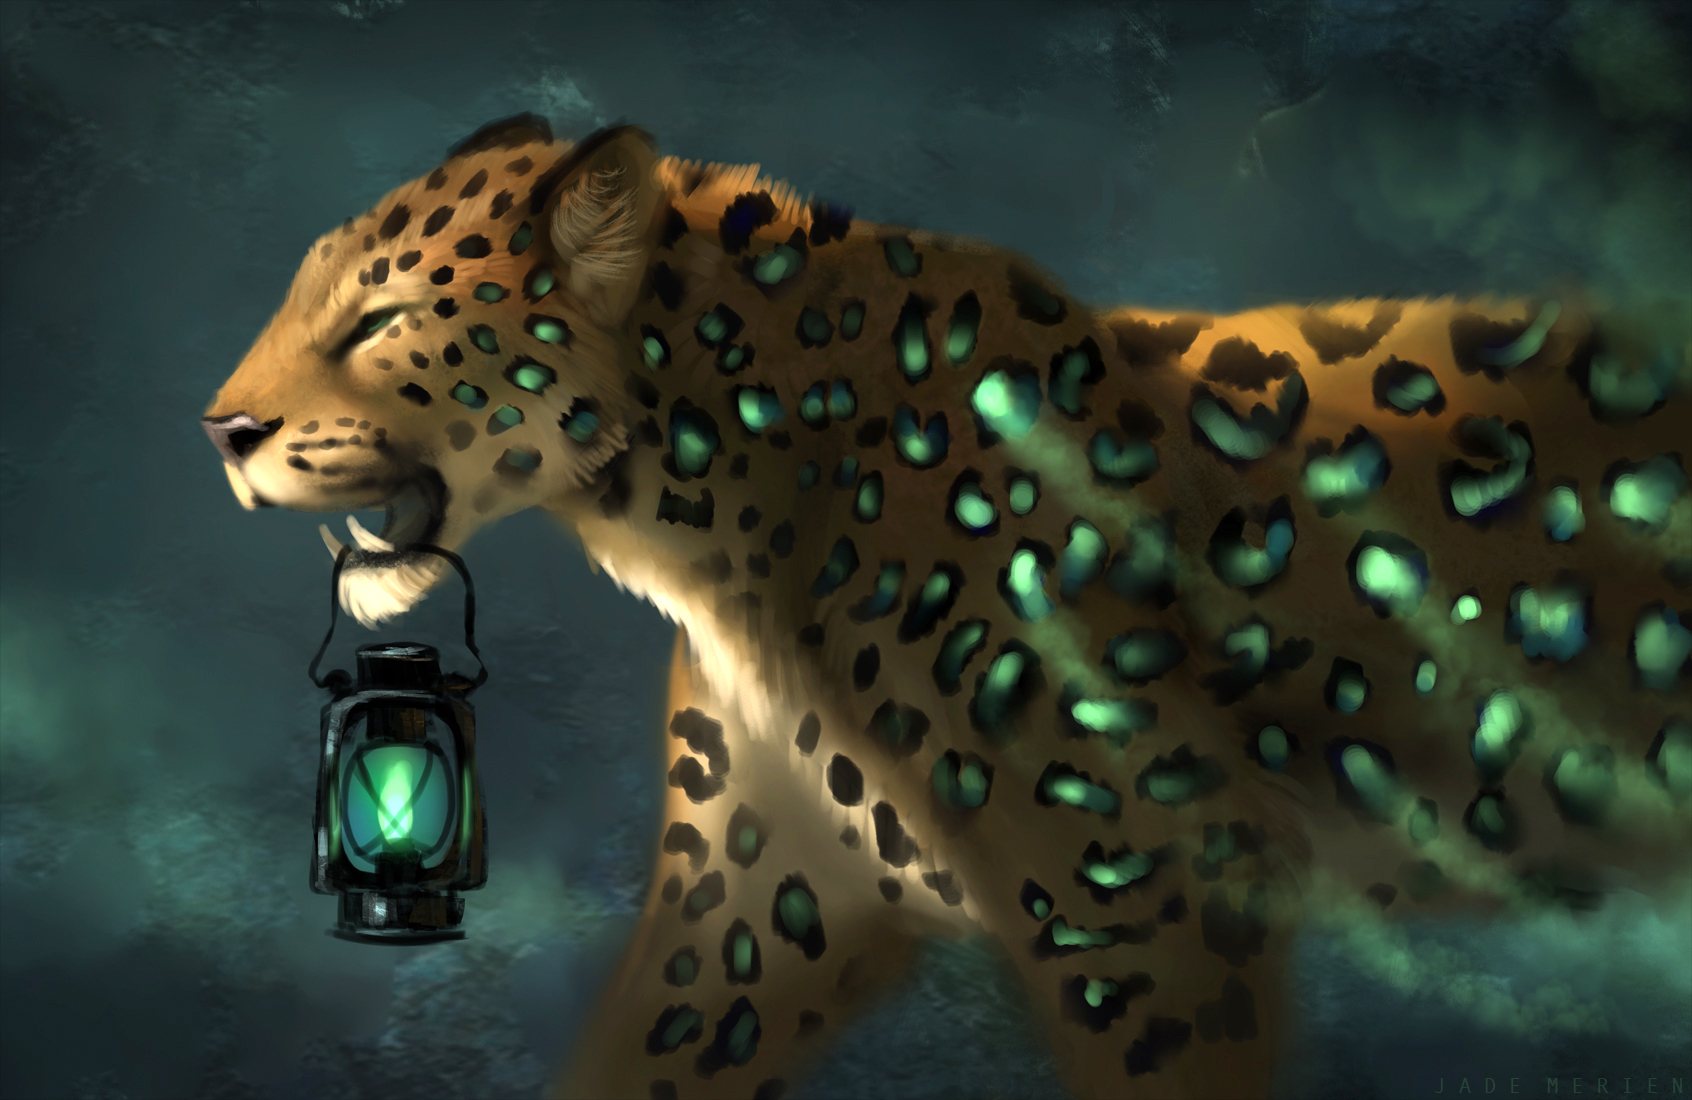 Фото Леопард со светящимися пятнами на шерсти, с фонарем в пасти, by JadeMerien